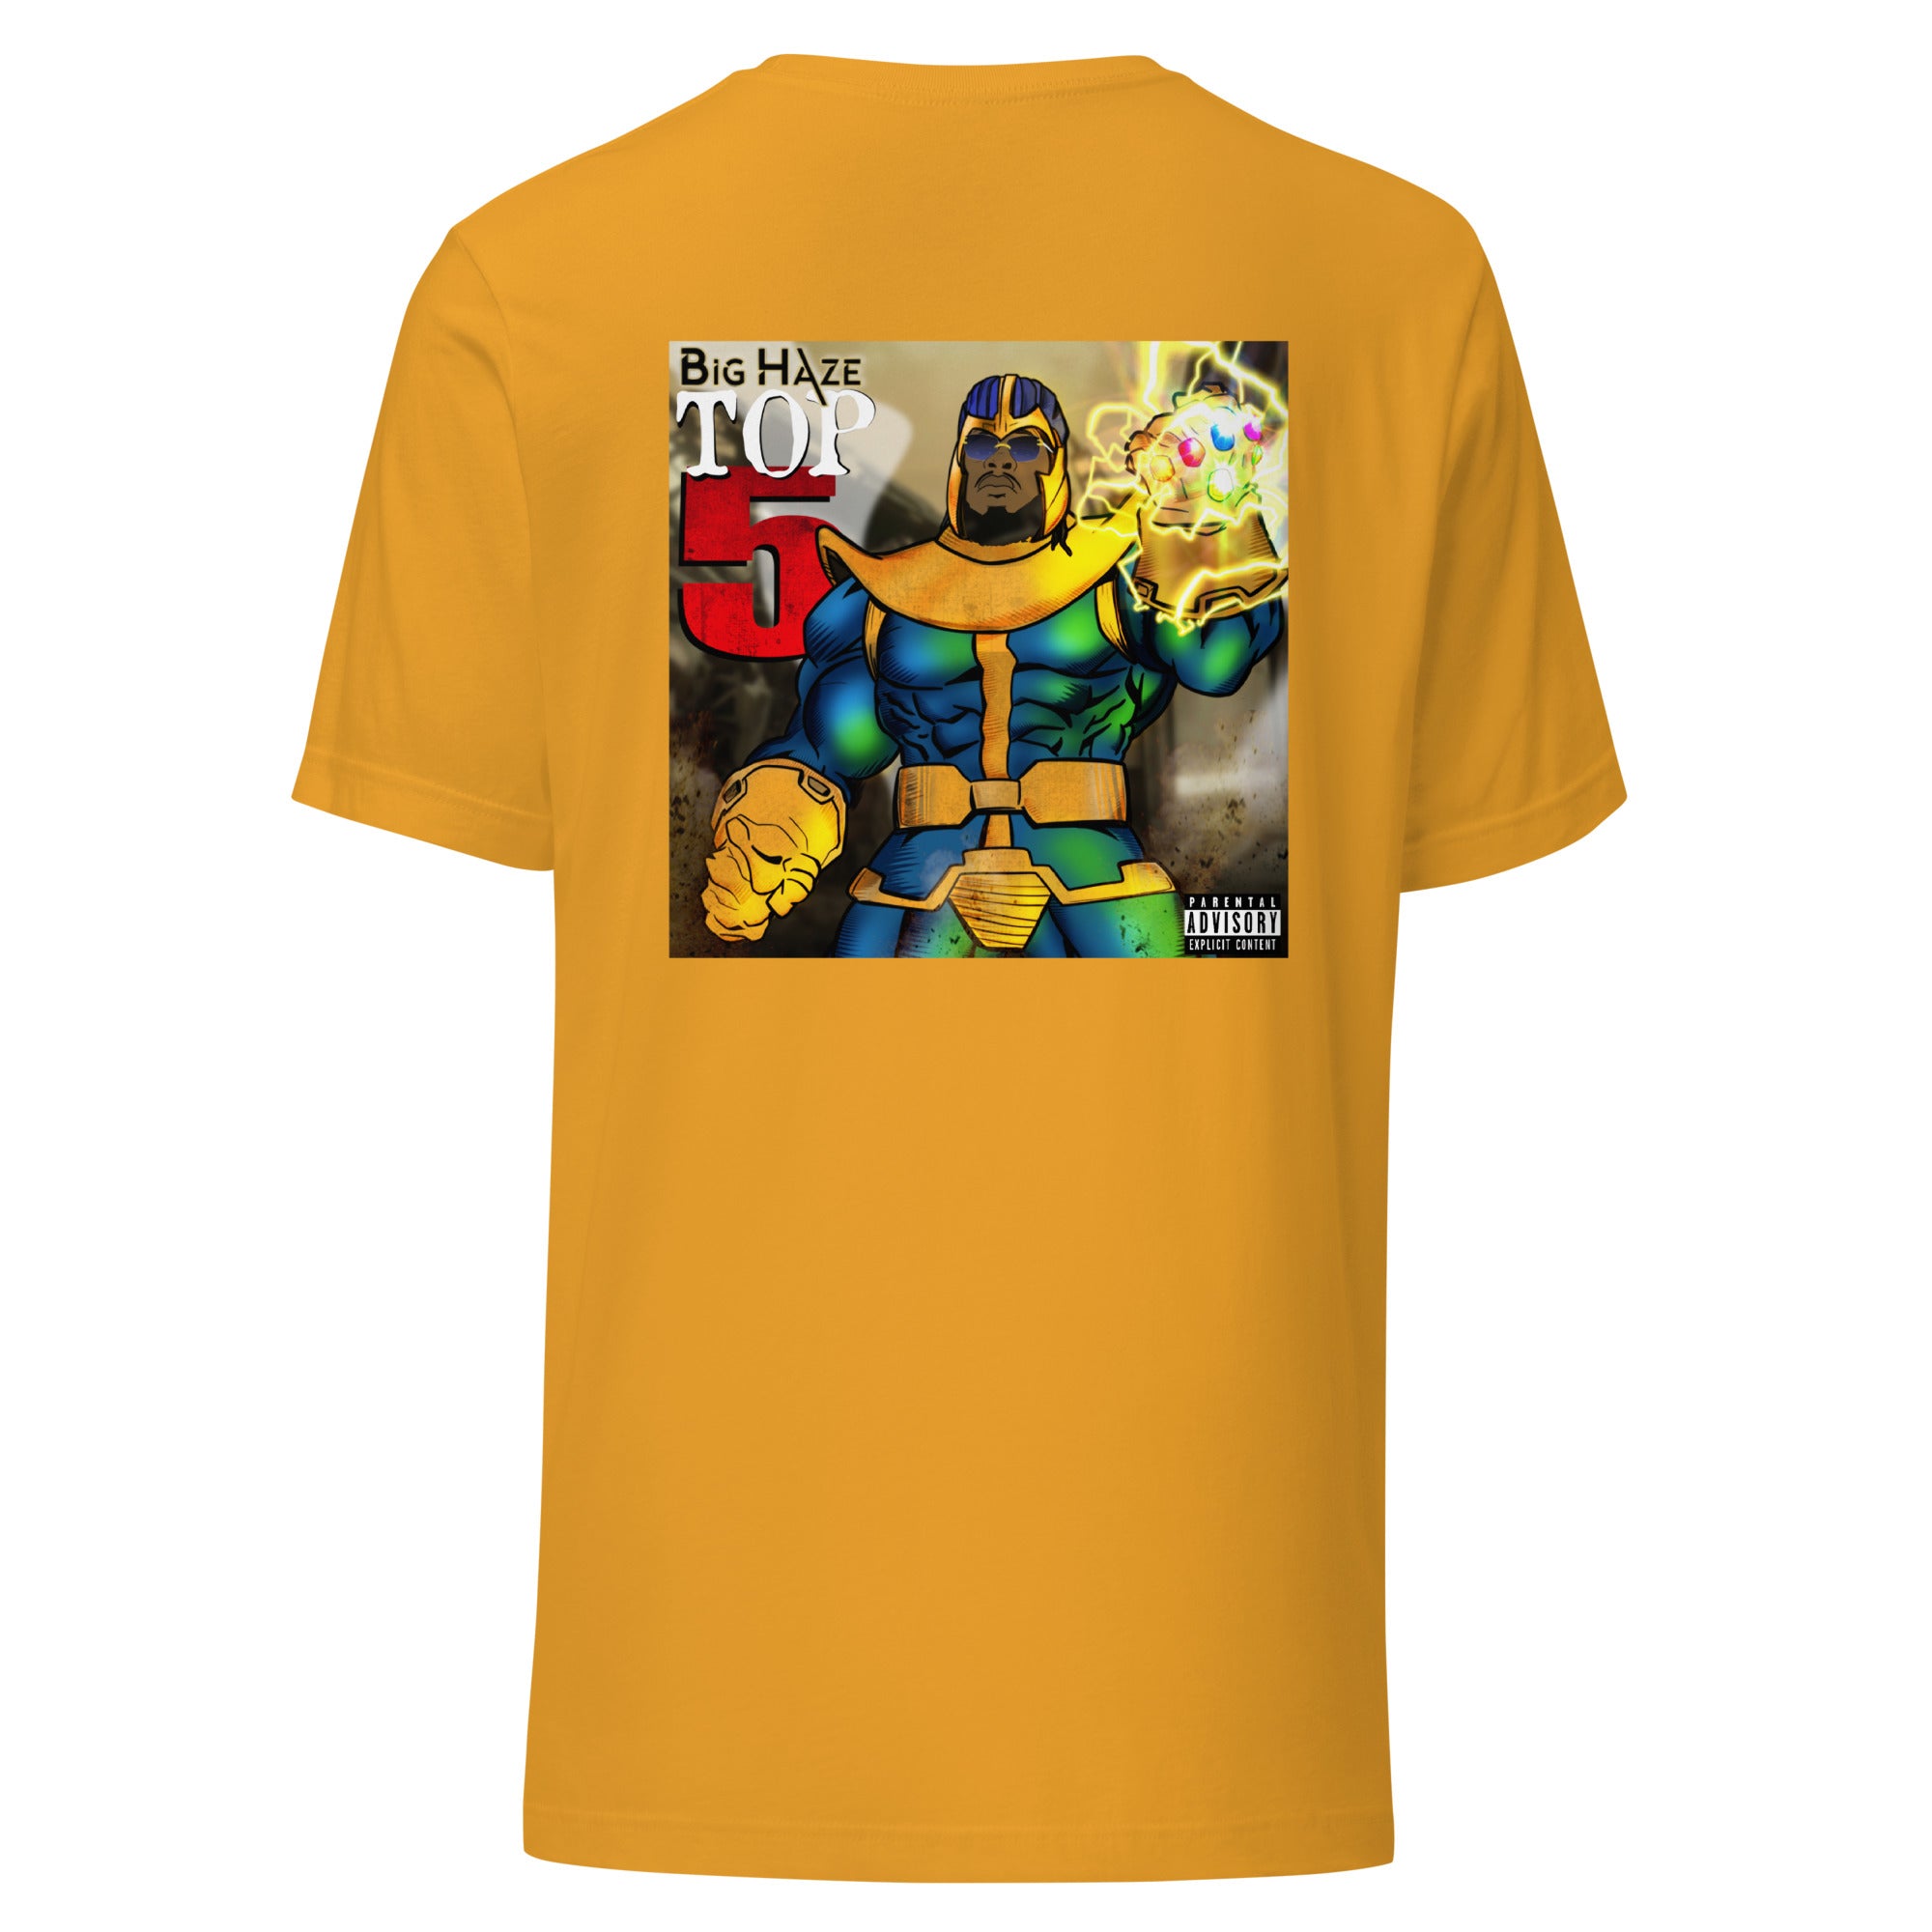 Big Haze - "Top 5" - Unisex t-shirt